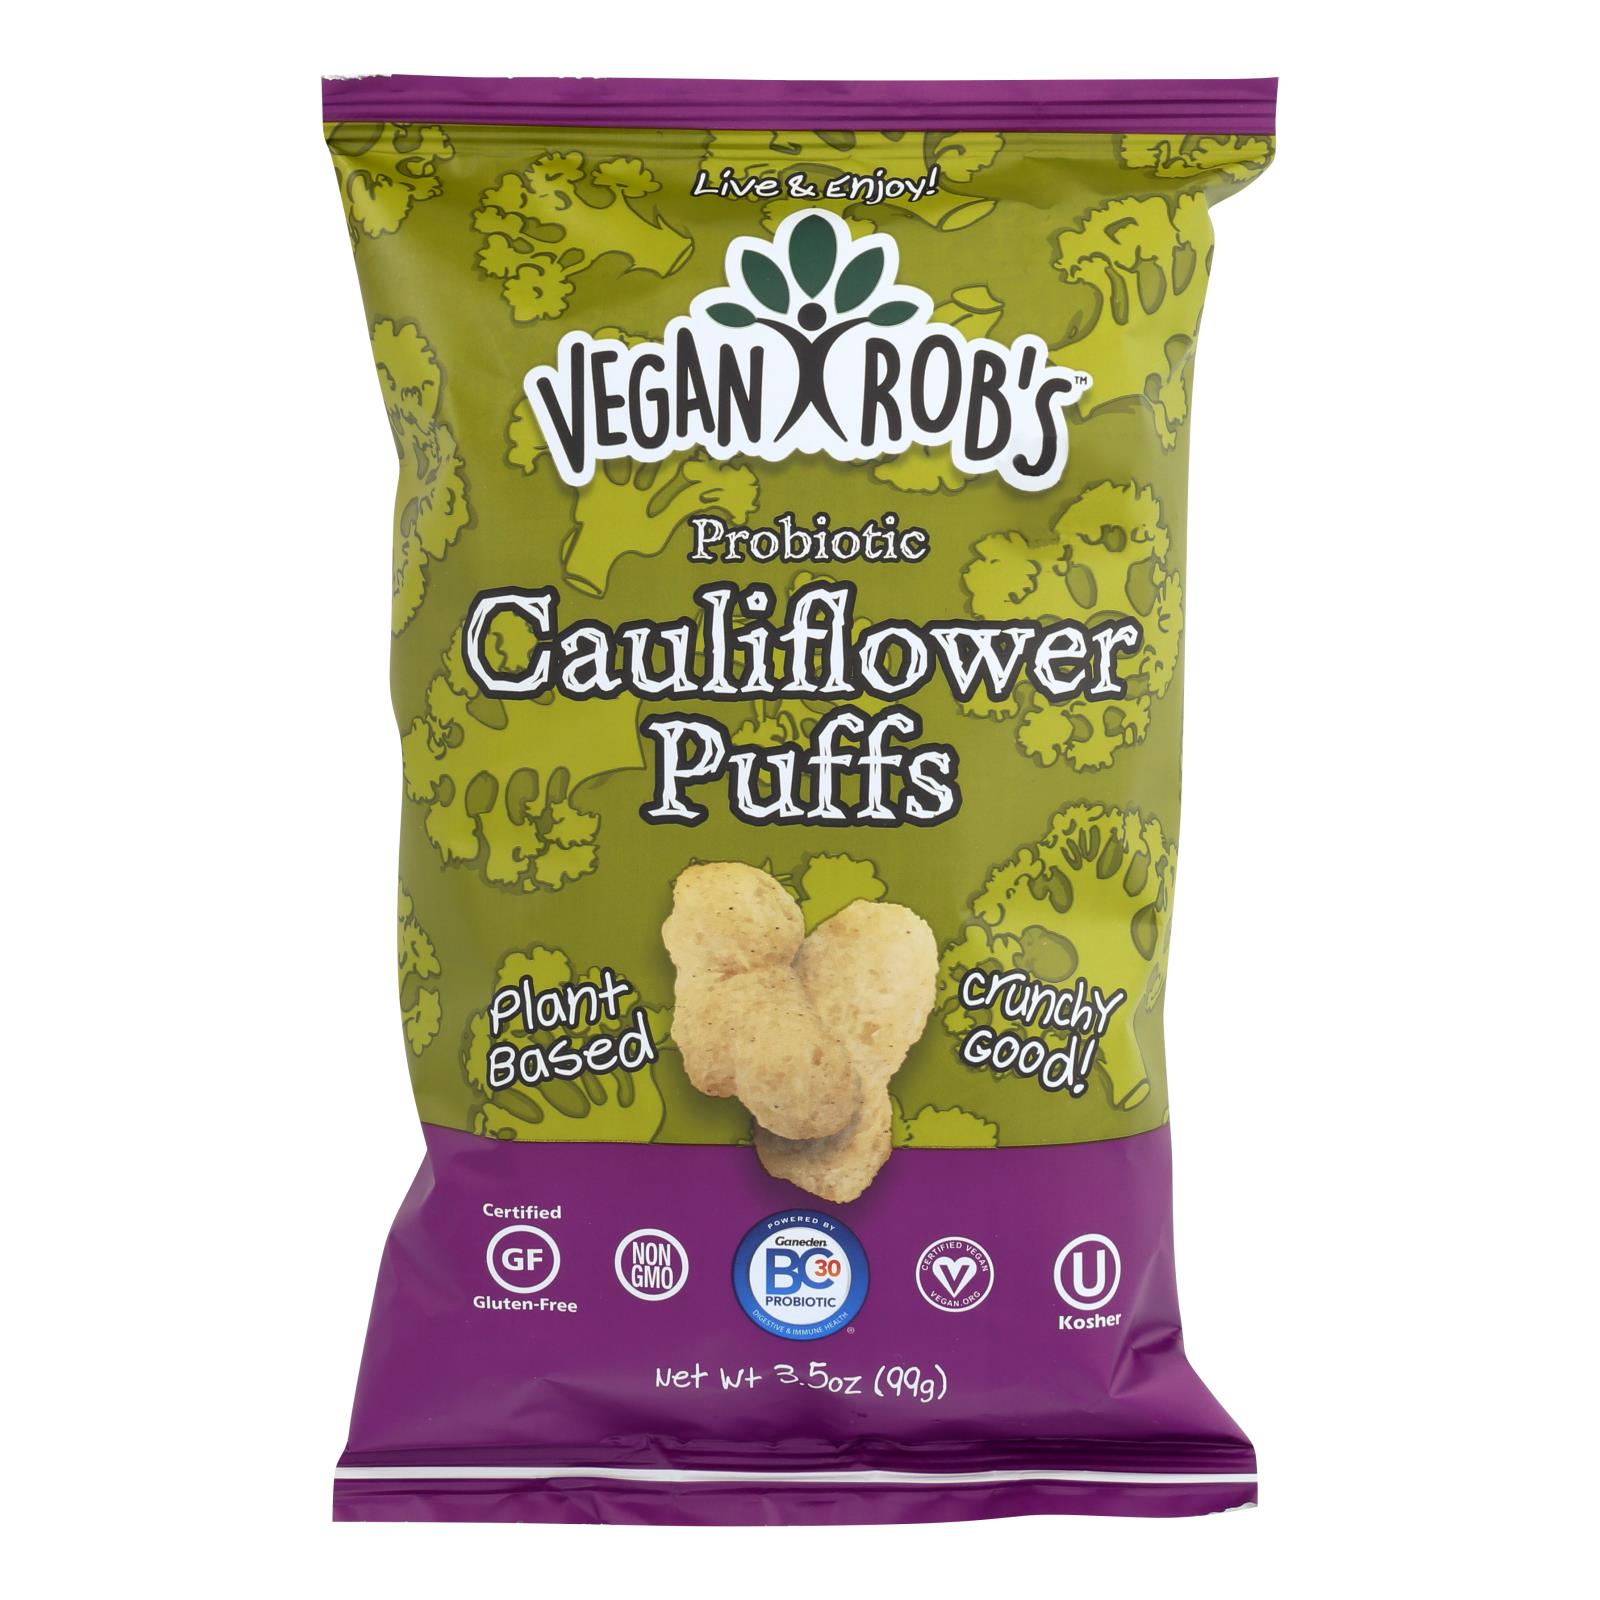 Vegan Rob's Probiotic Cauliflower Puffs - 12개 묶음상품 - 3.5 OZ